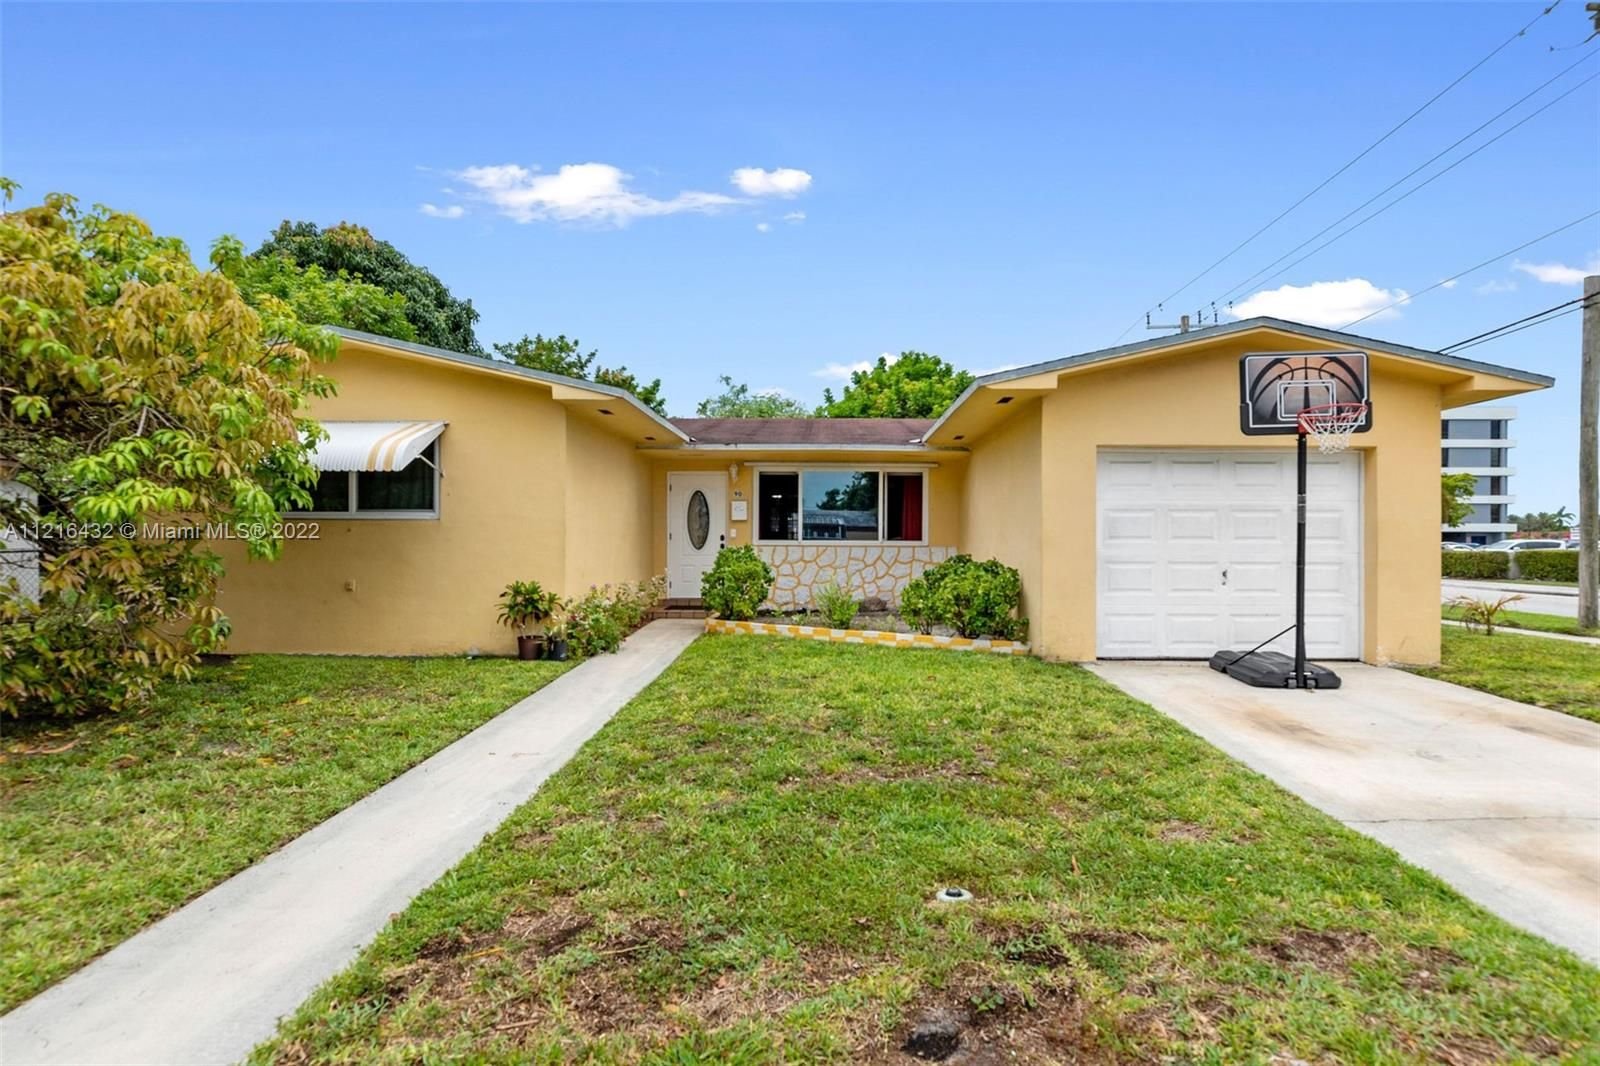 Real estate property located at 90 184th Ter, Miami-Dade County, Miami Gardens, FL